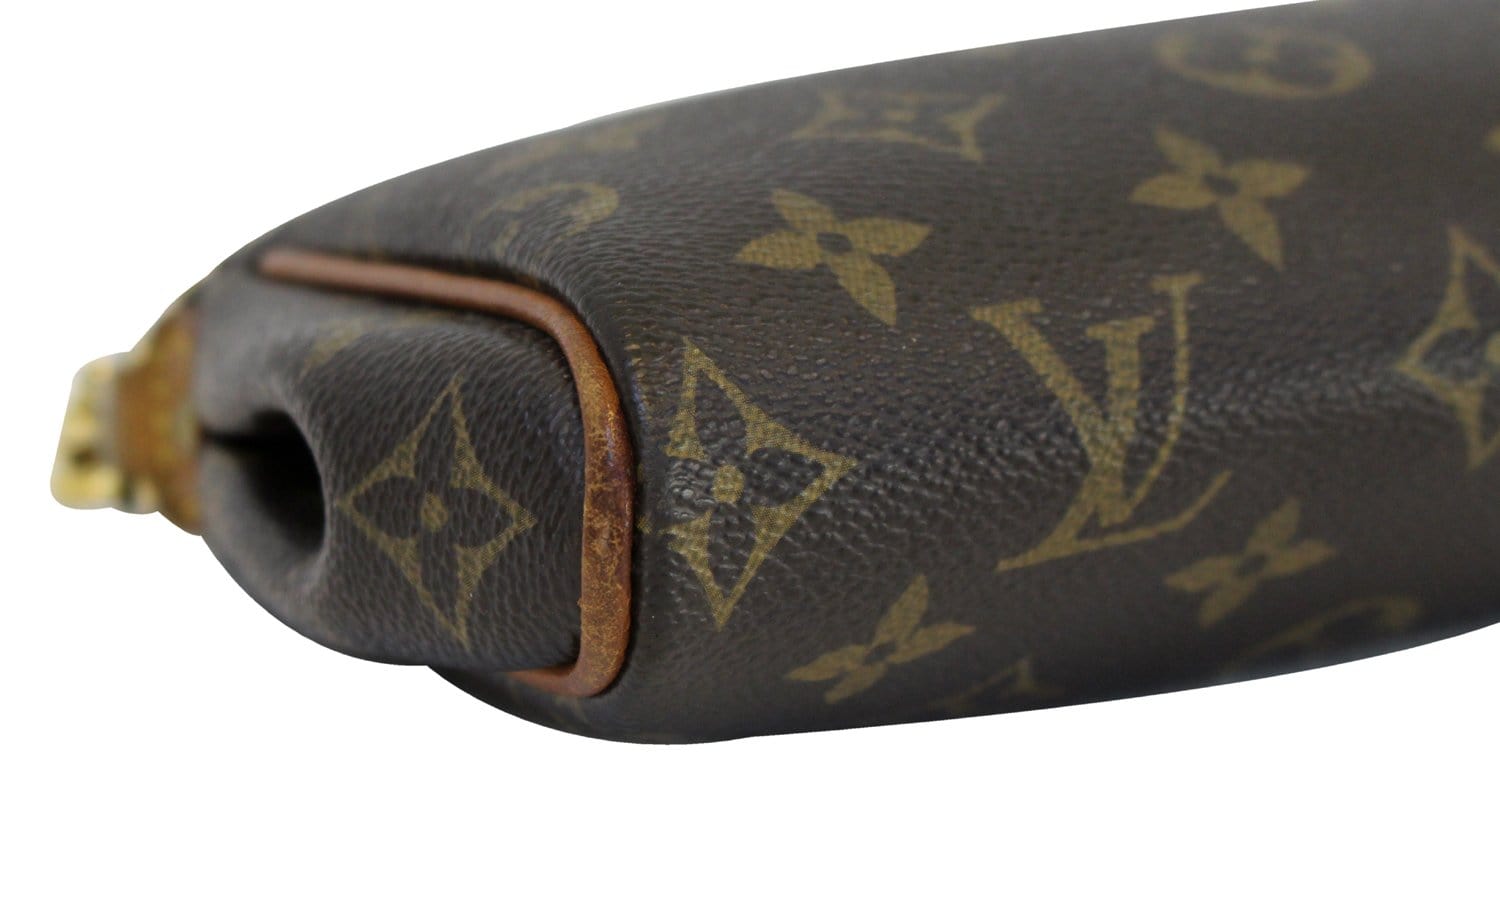 Louis Vuitton Shoulder Bag Pochette - Eva LV Logo Monogram Gold